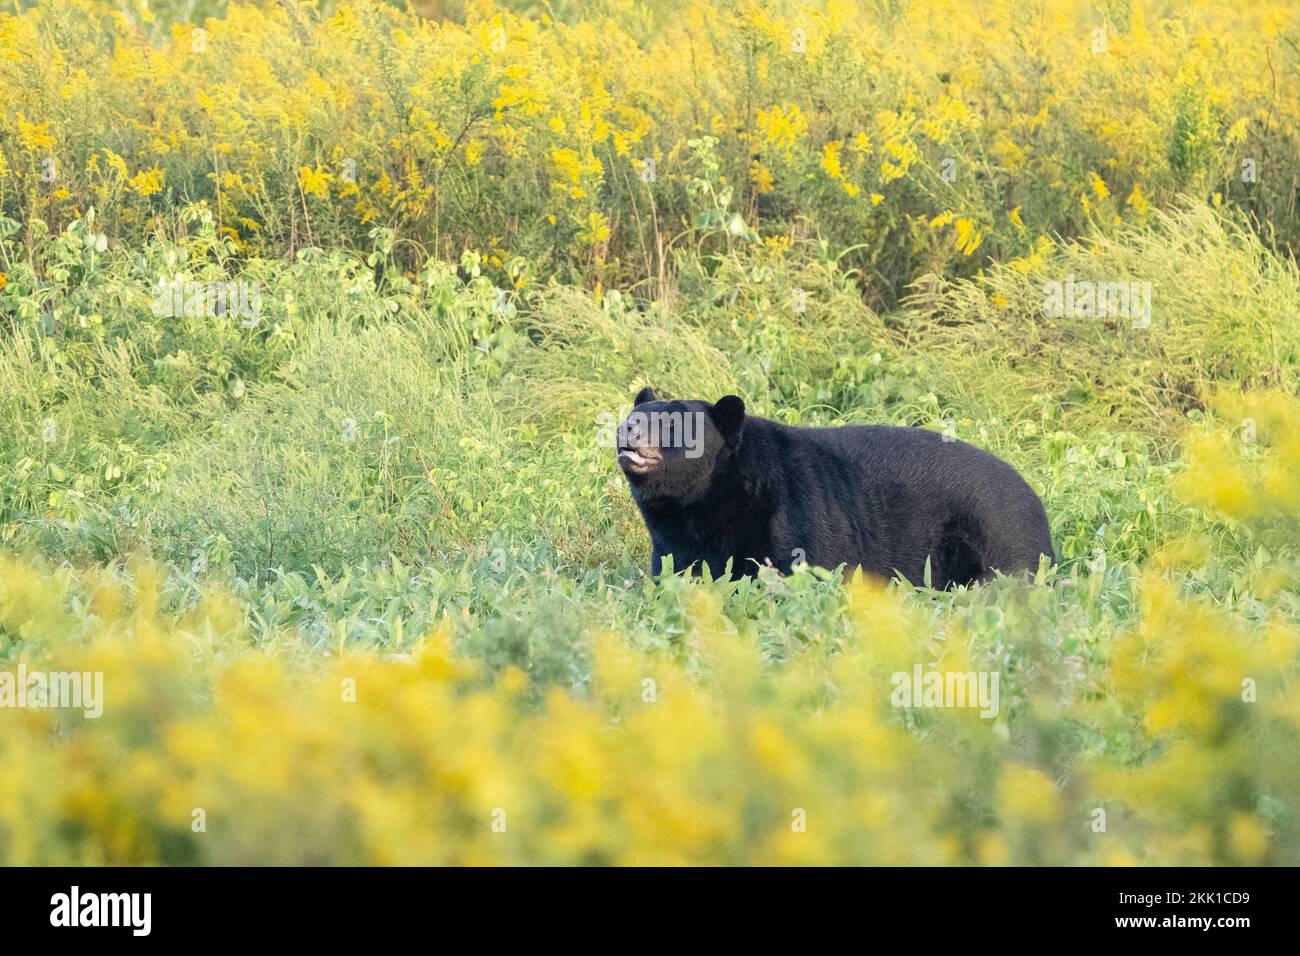 American Black Bear (Ursus americanus) in field of goldenrod Stock Photo